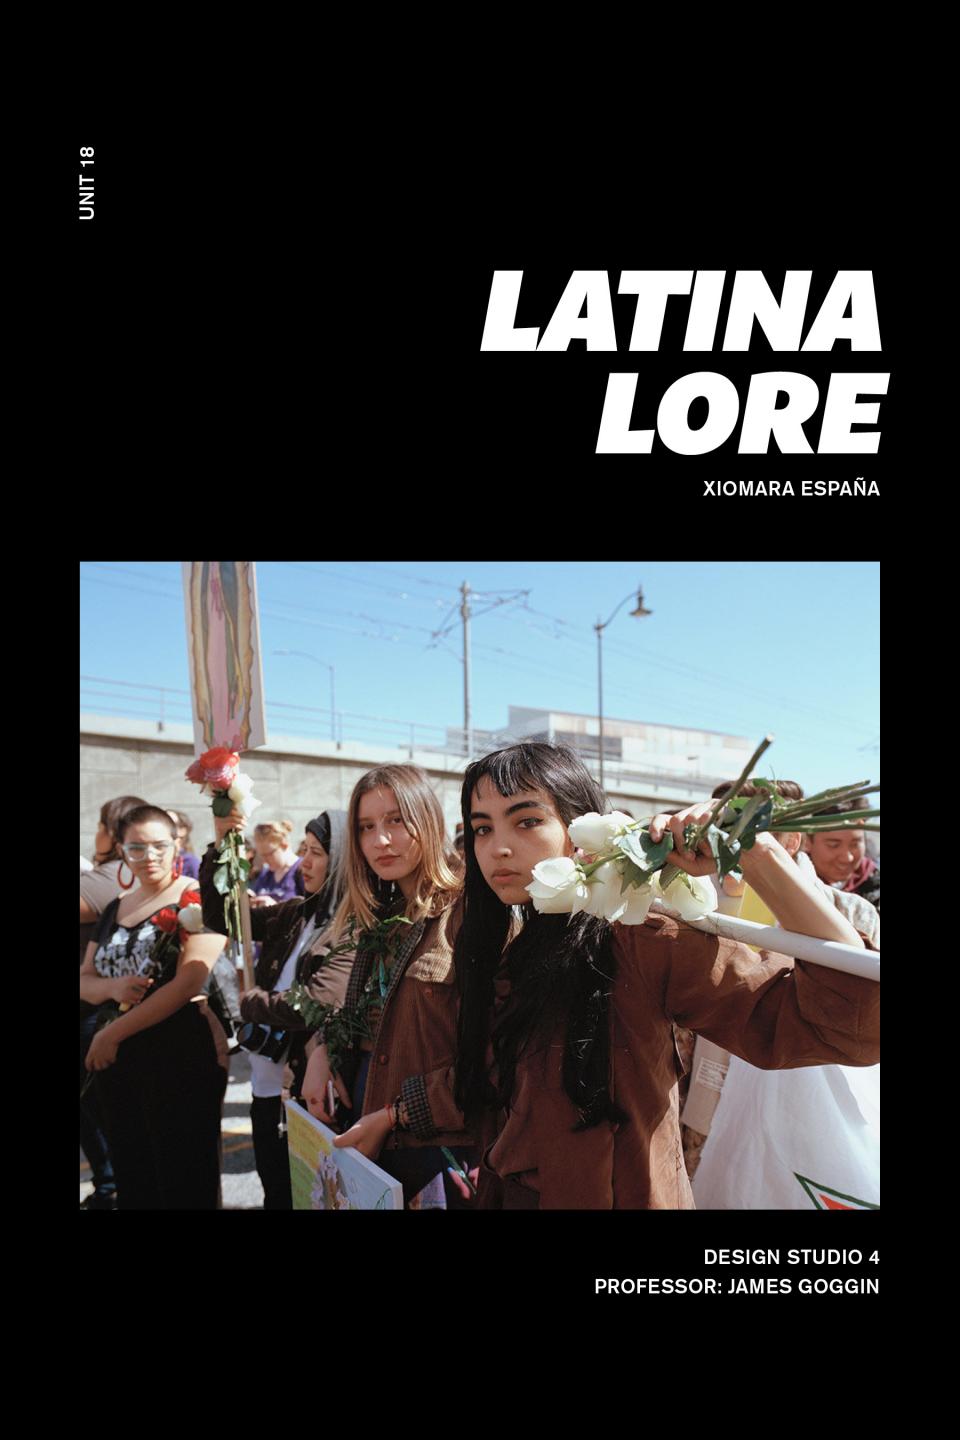 Cover of the zine 'Latinalore'